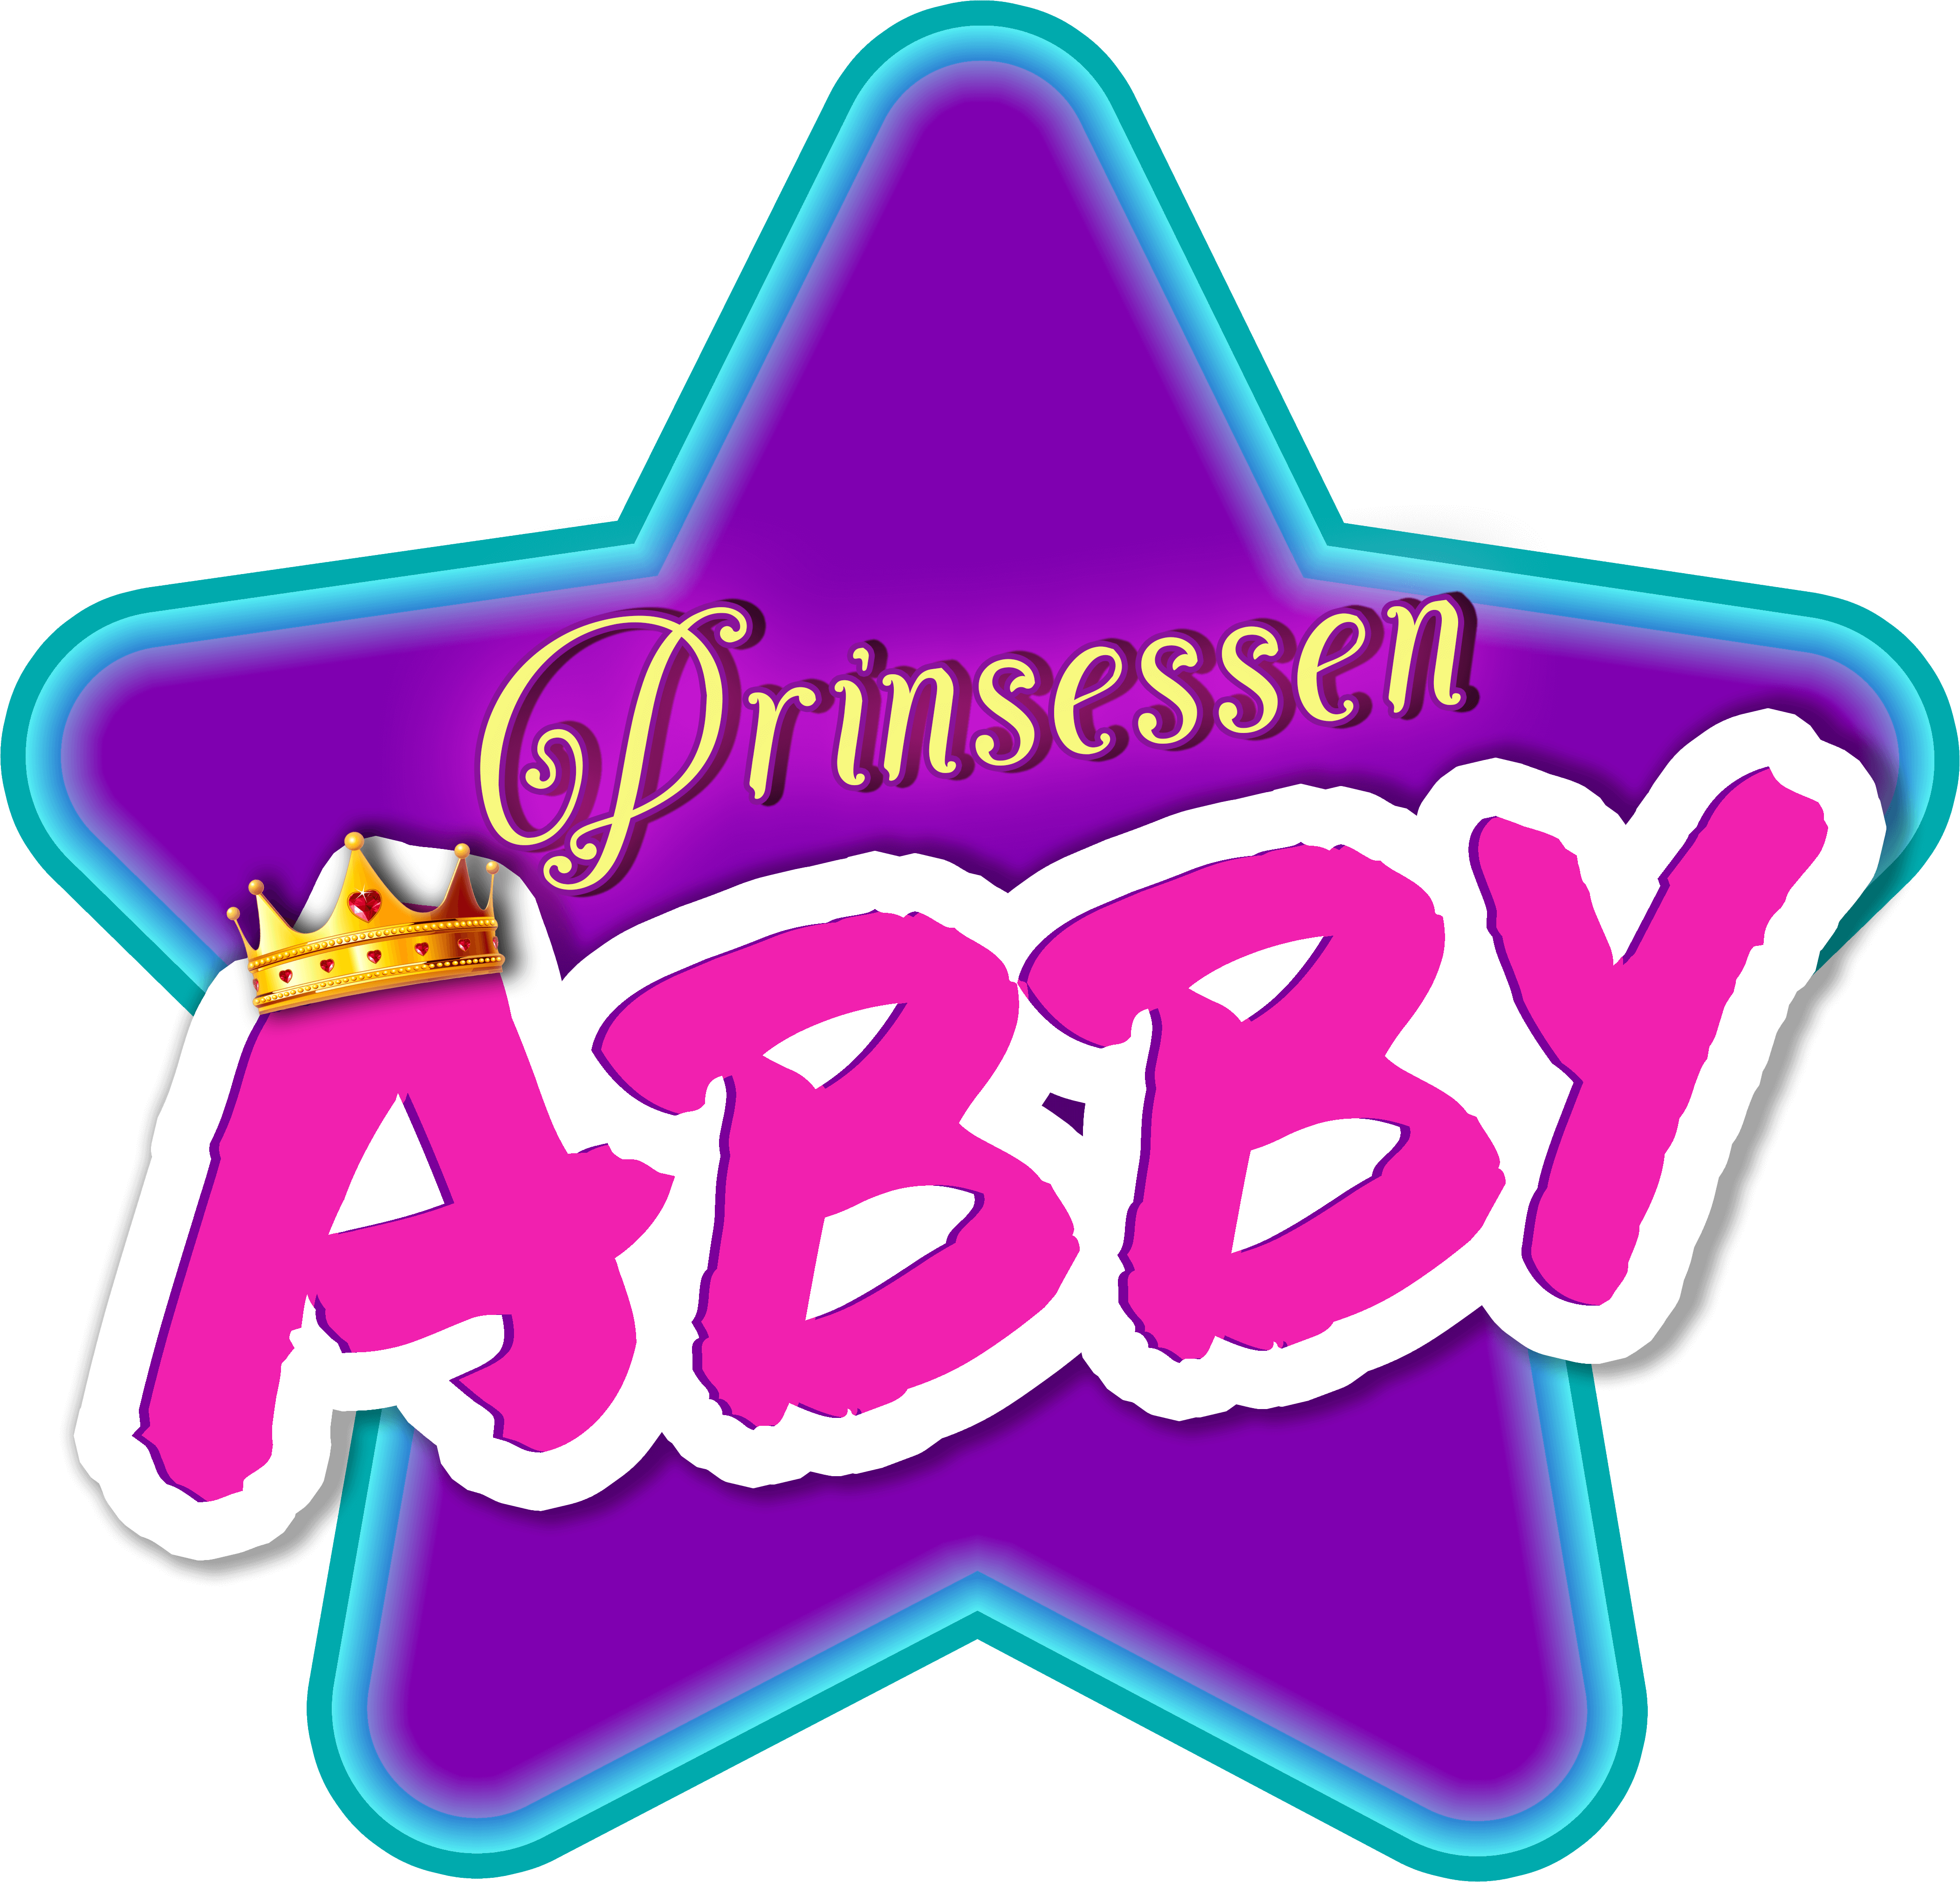 PrinsessenAbby_logoVersion3